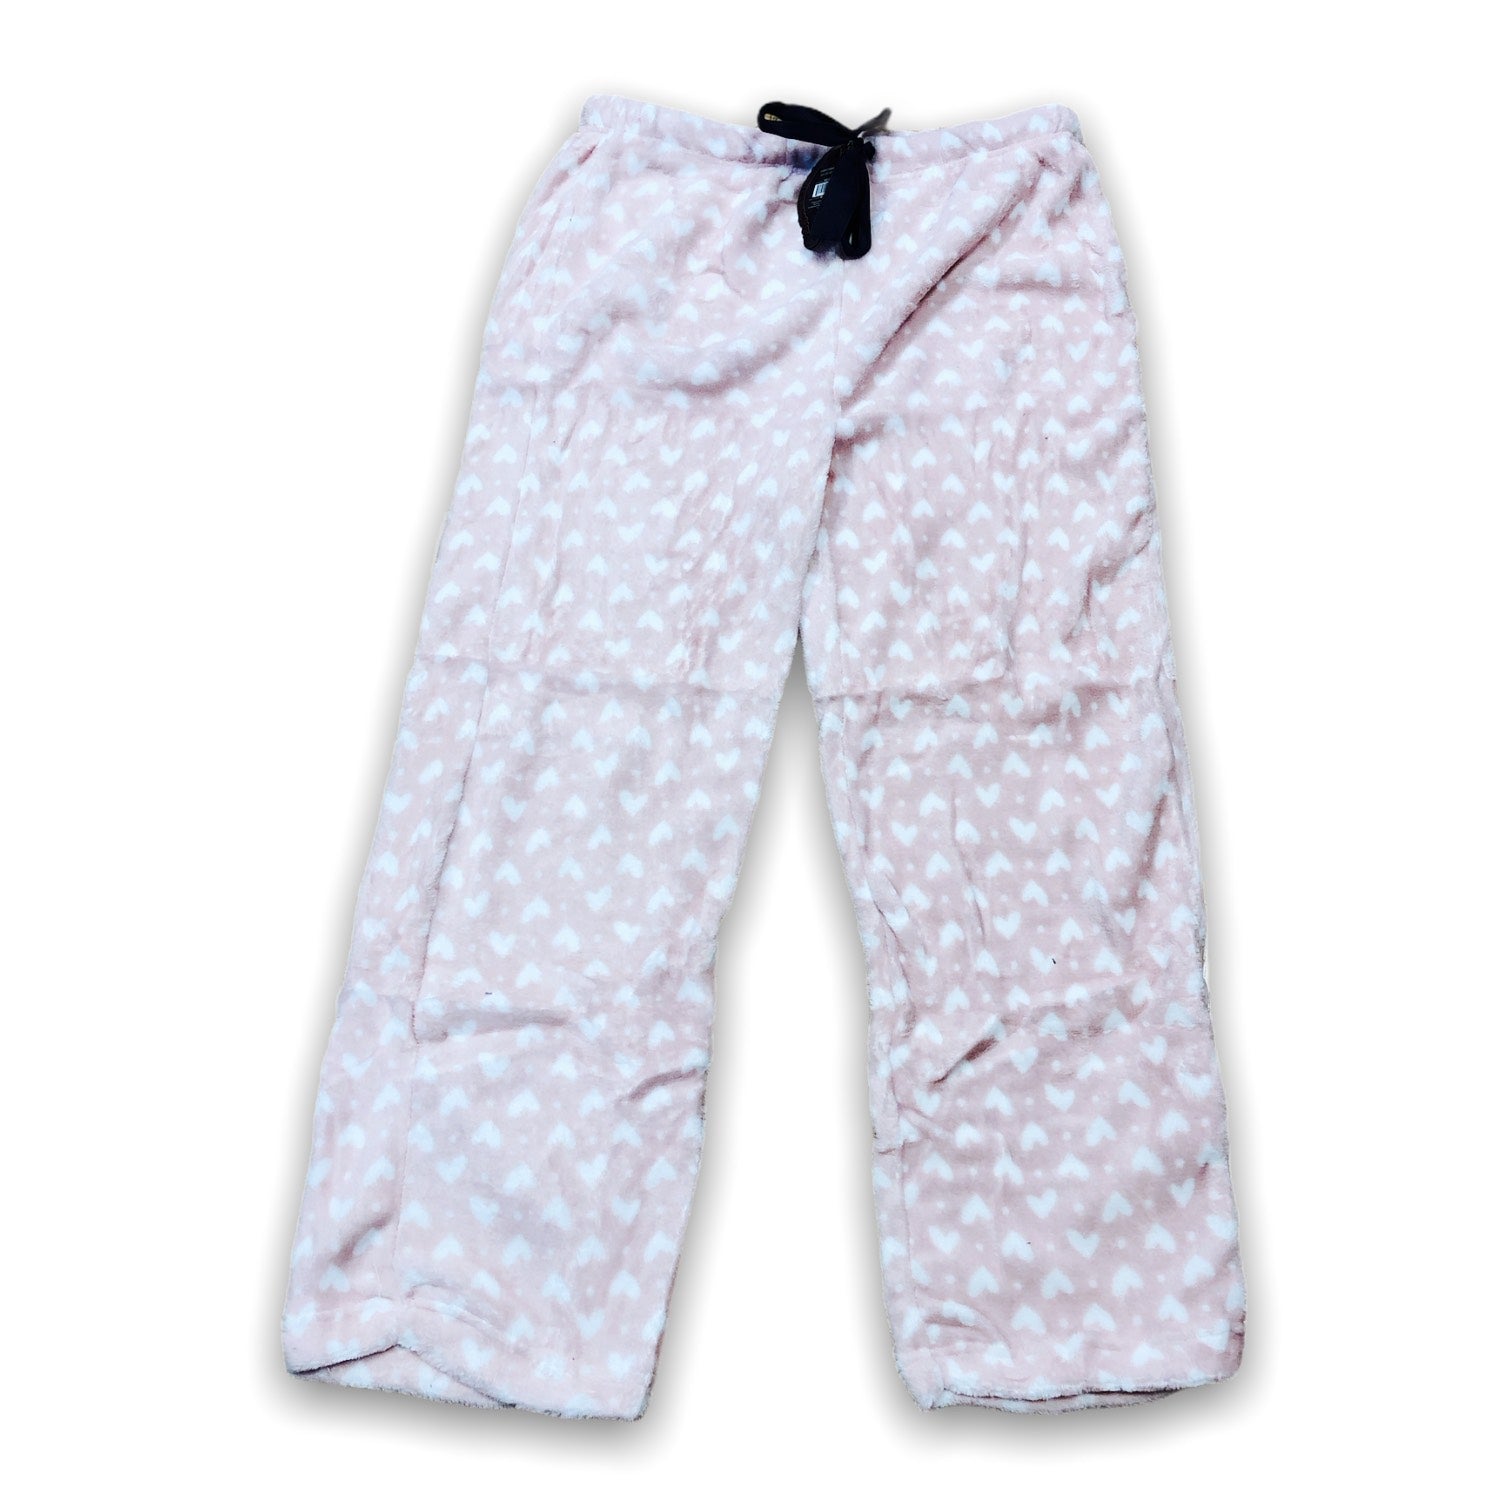 Women's Polyester Micropolar Sleep Pants